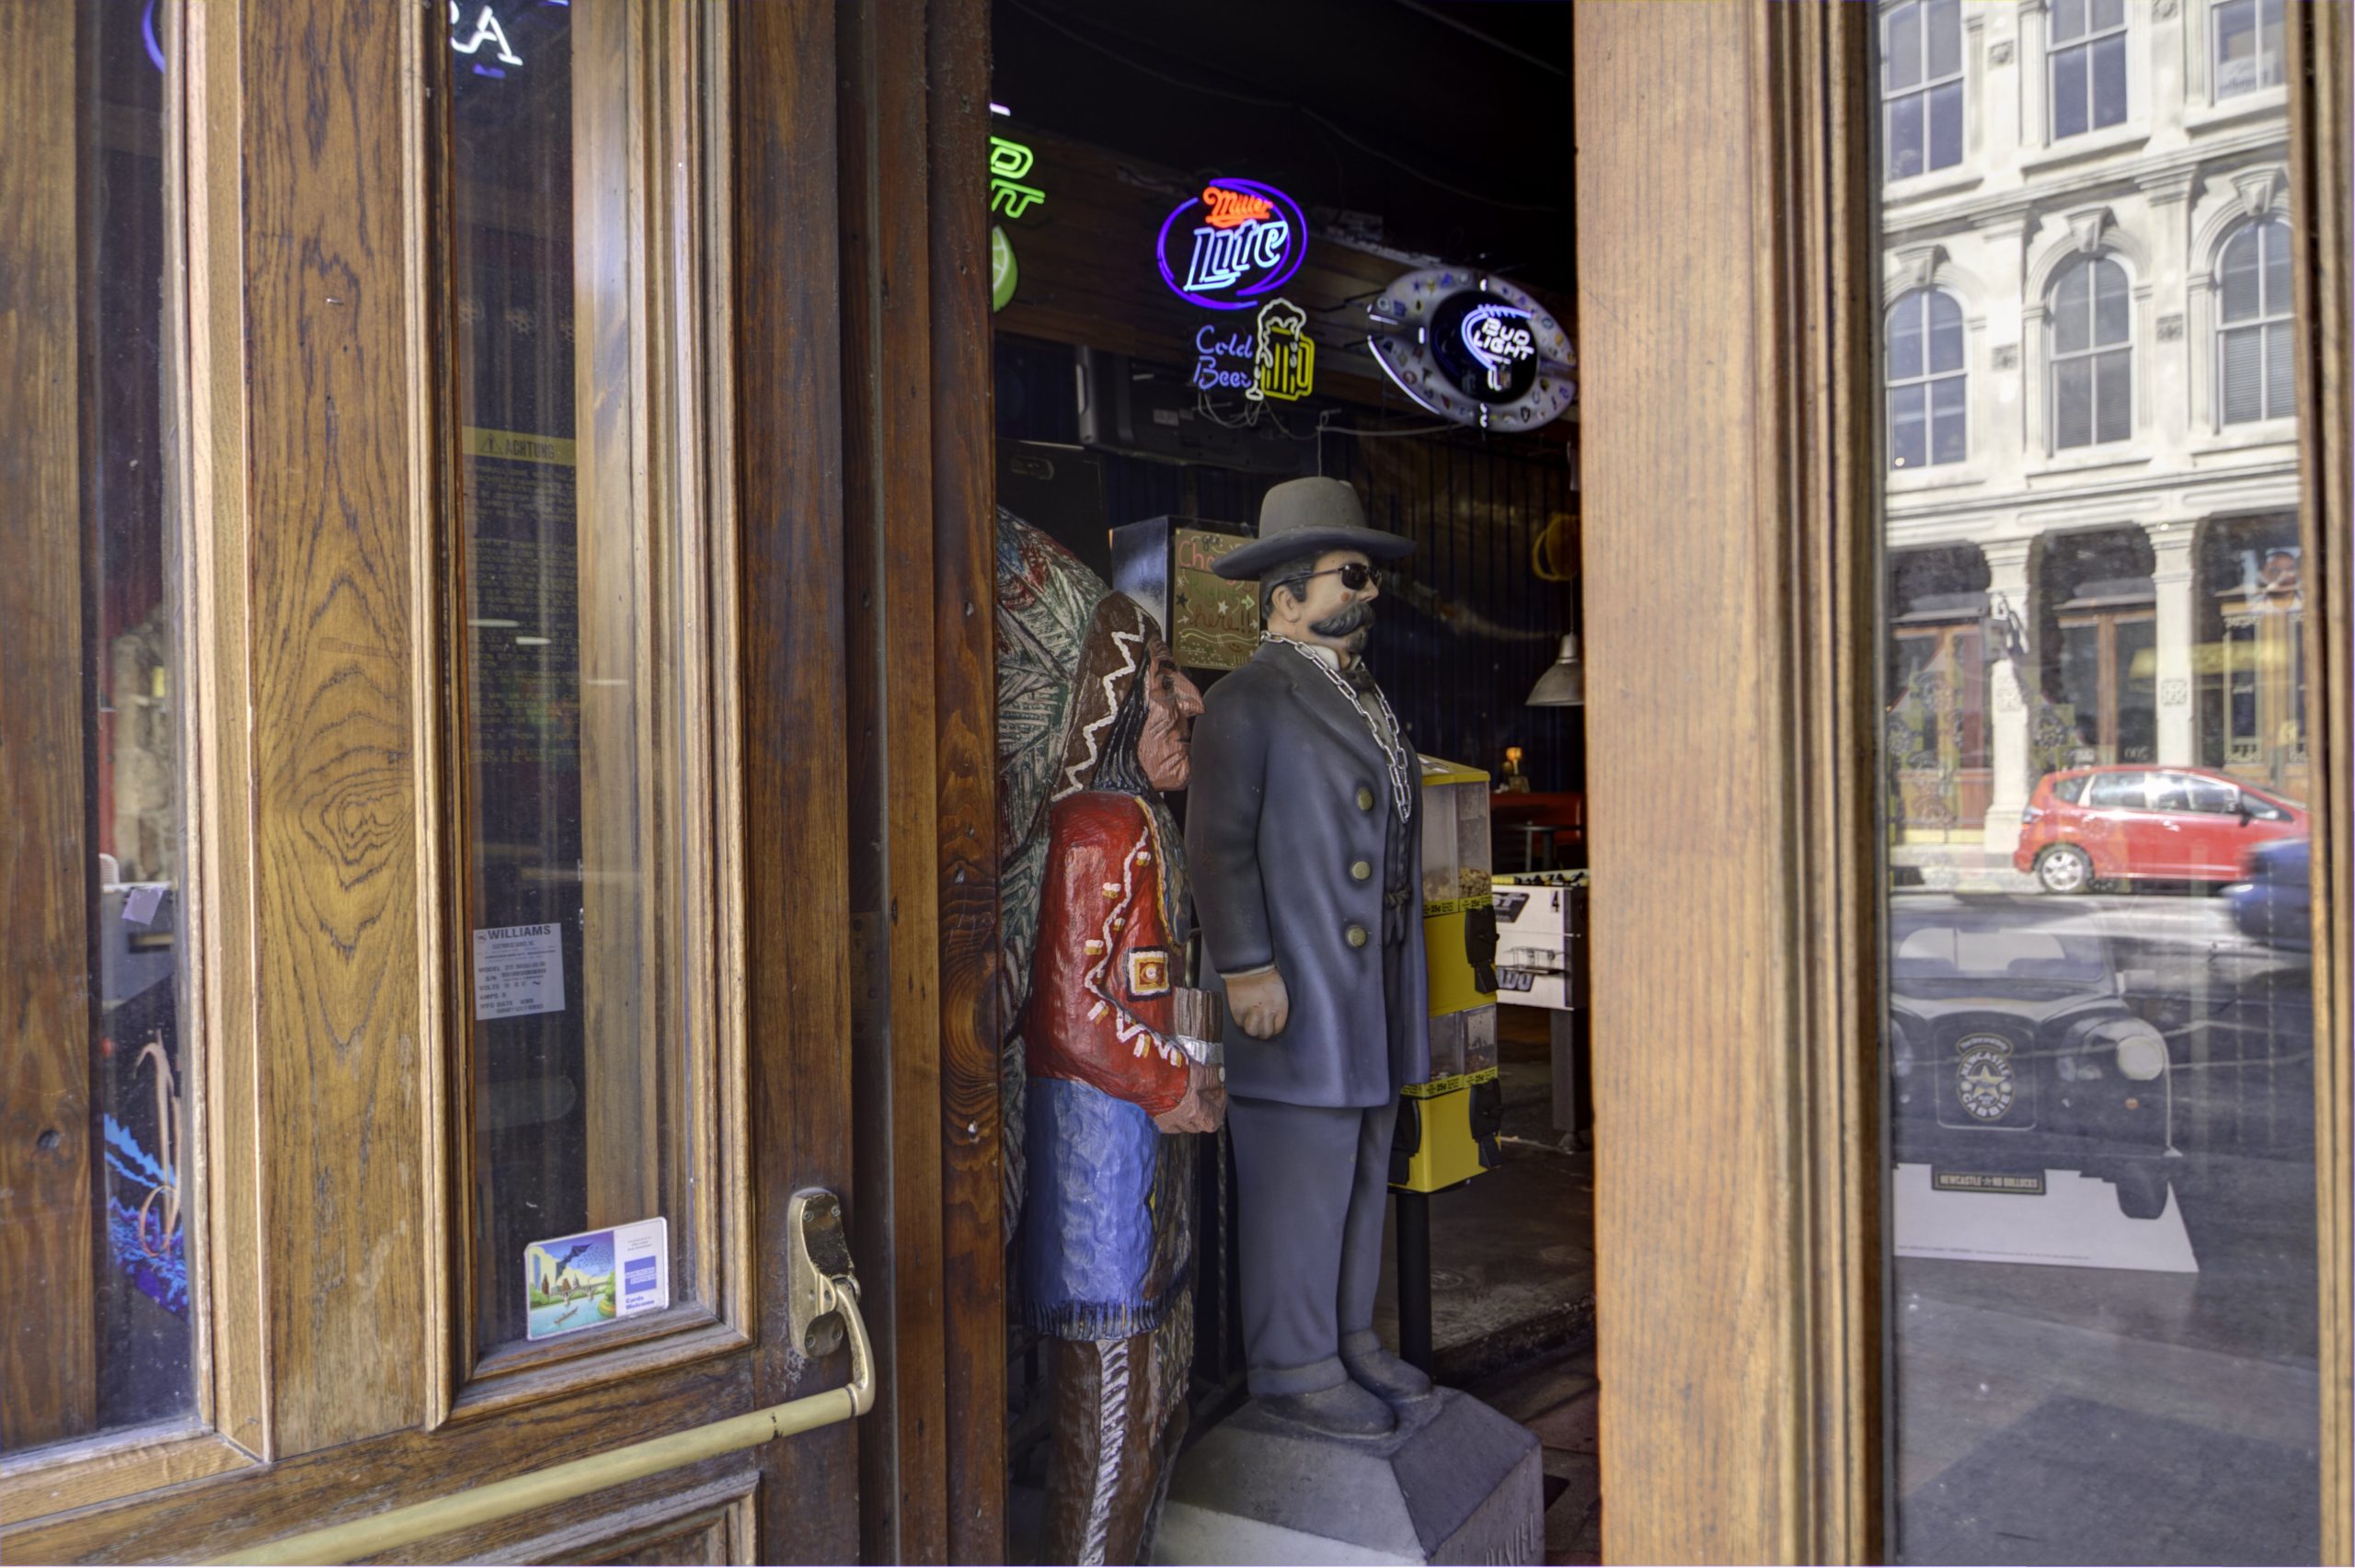 Buffalo Billiards Dirty 6th Street arcade bar - Photo: Will Taylor - LostinAustin.org